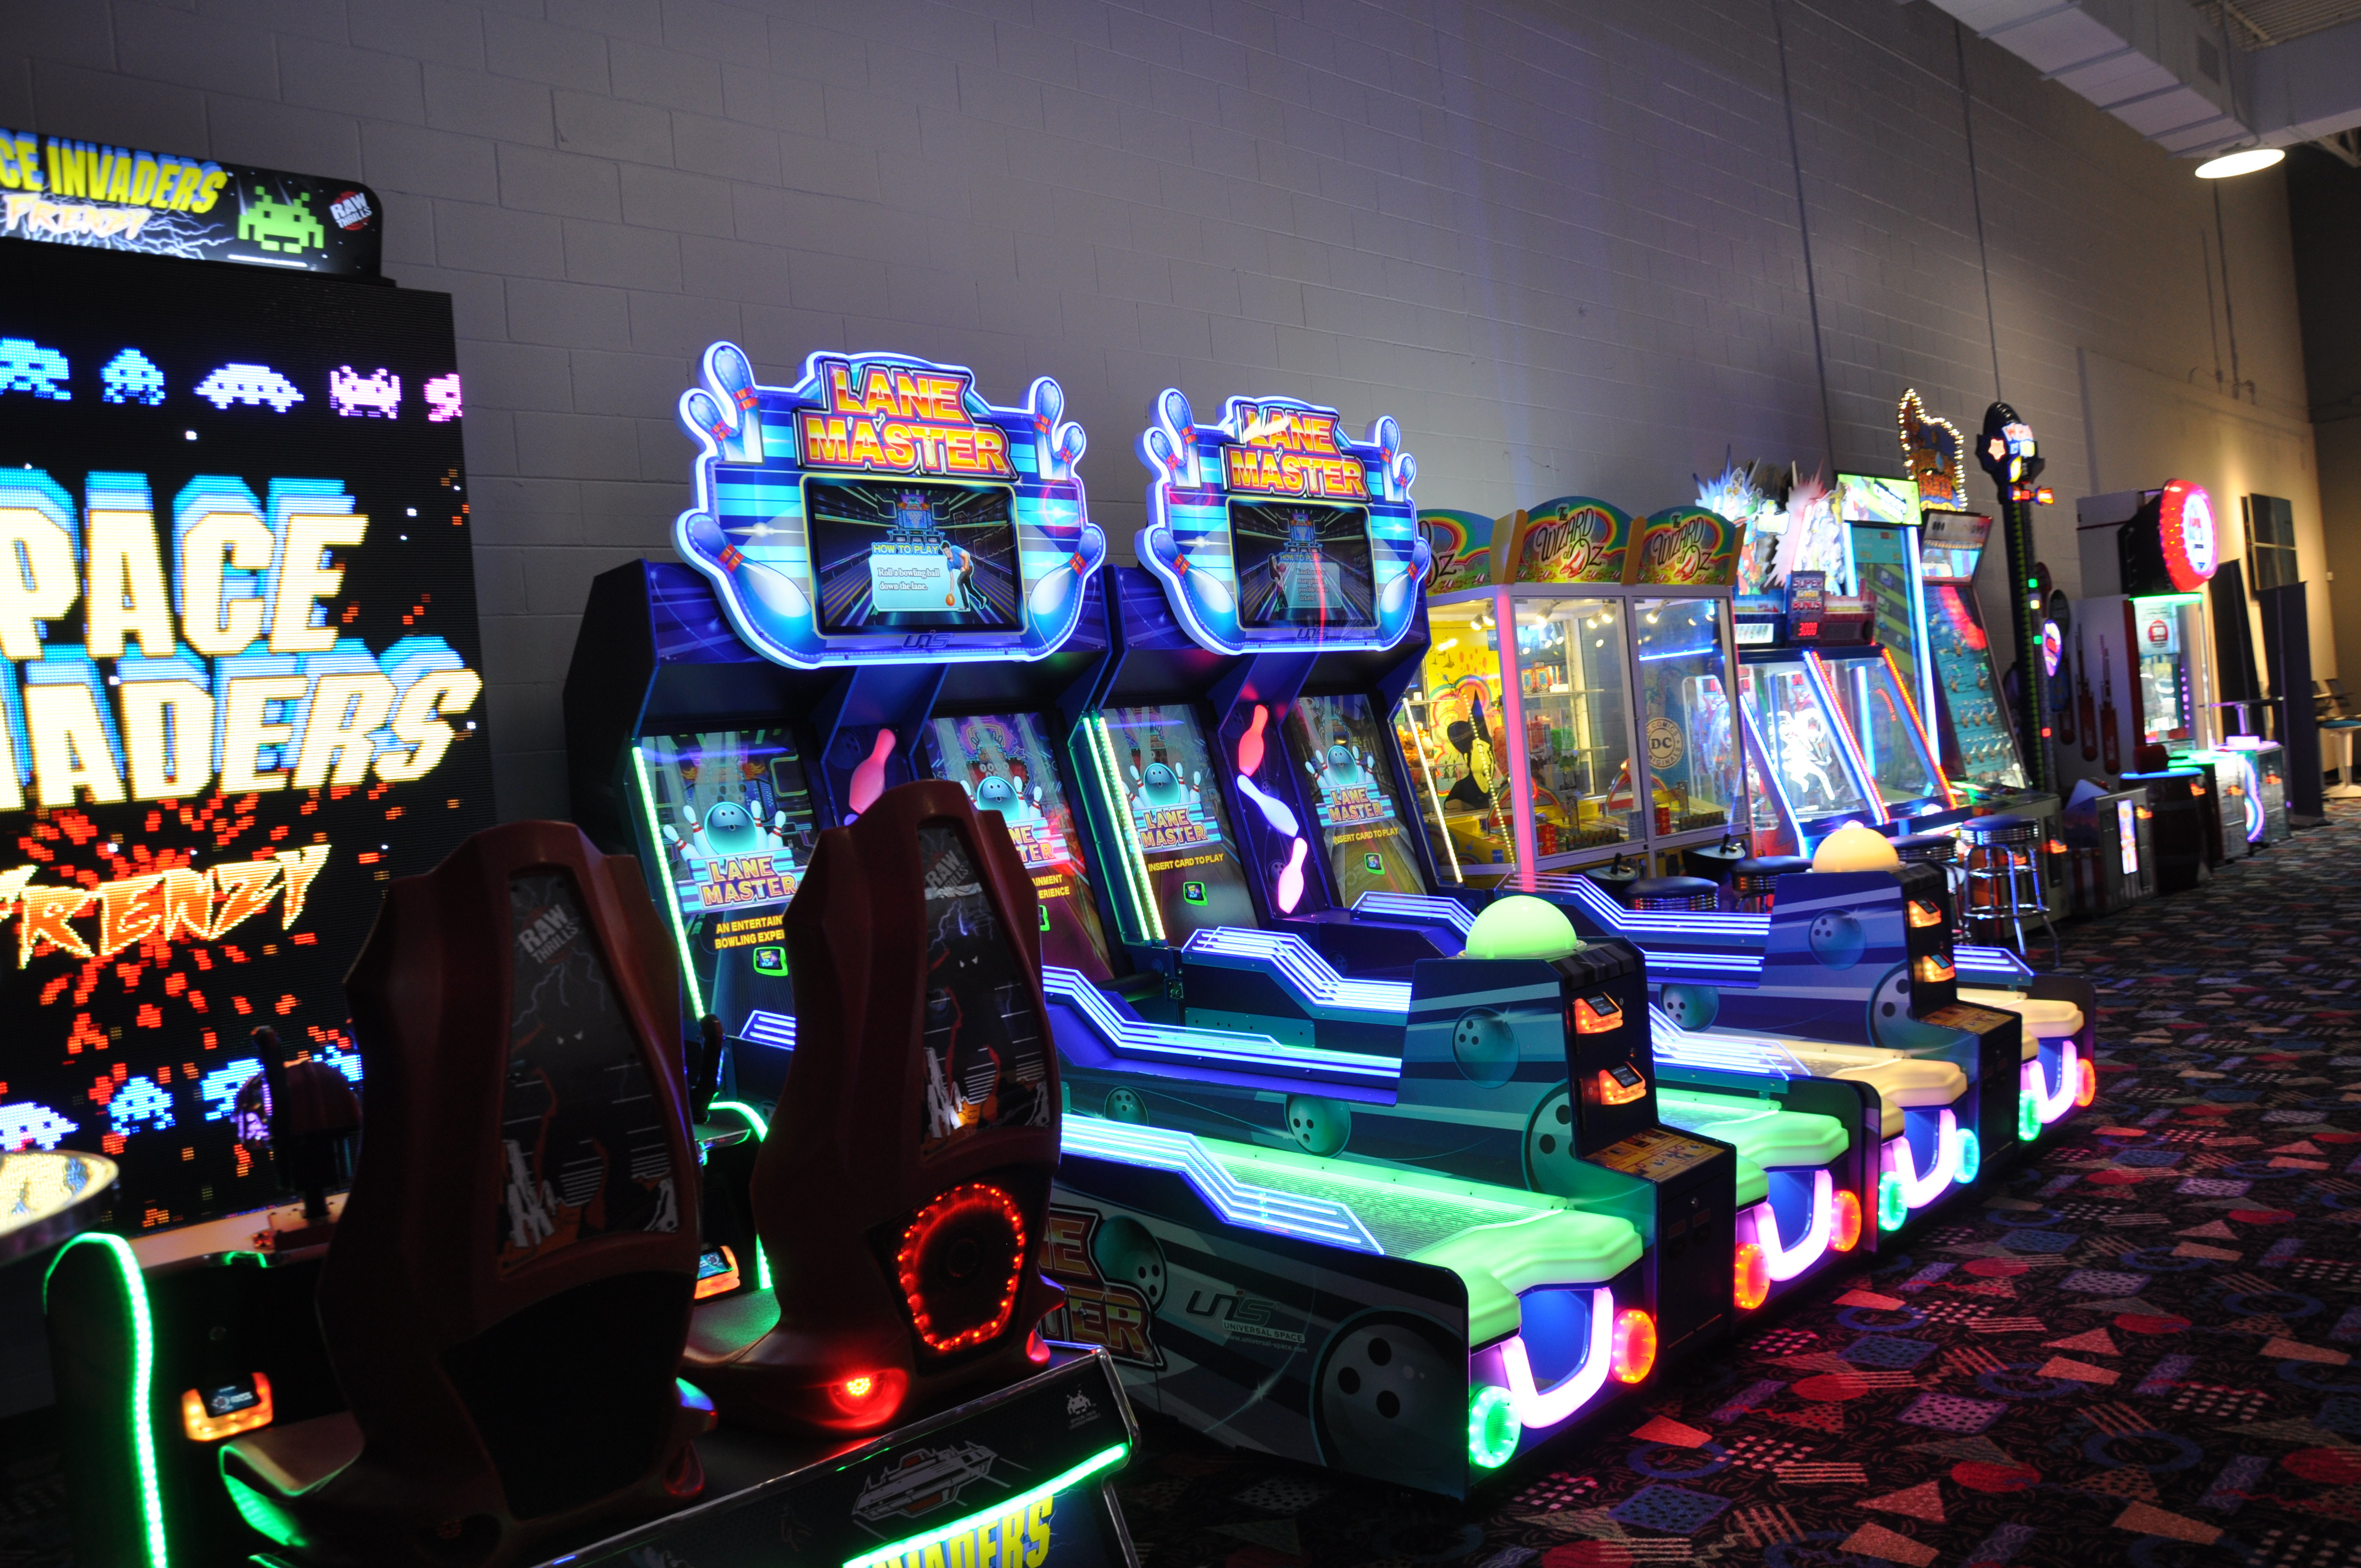 Black Ops Airsoft & Laser Tag Arcade - Airsoft & Laser Tag Arcade